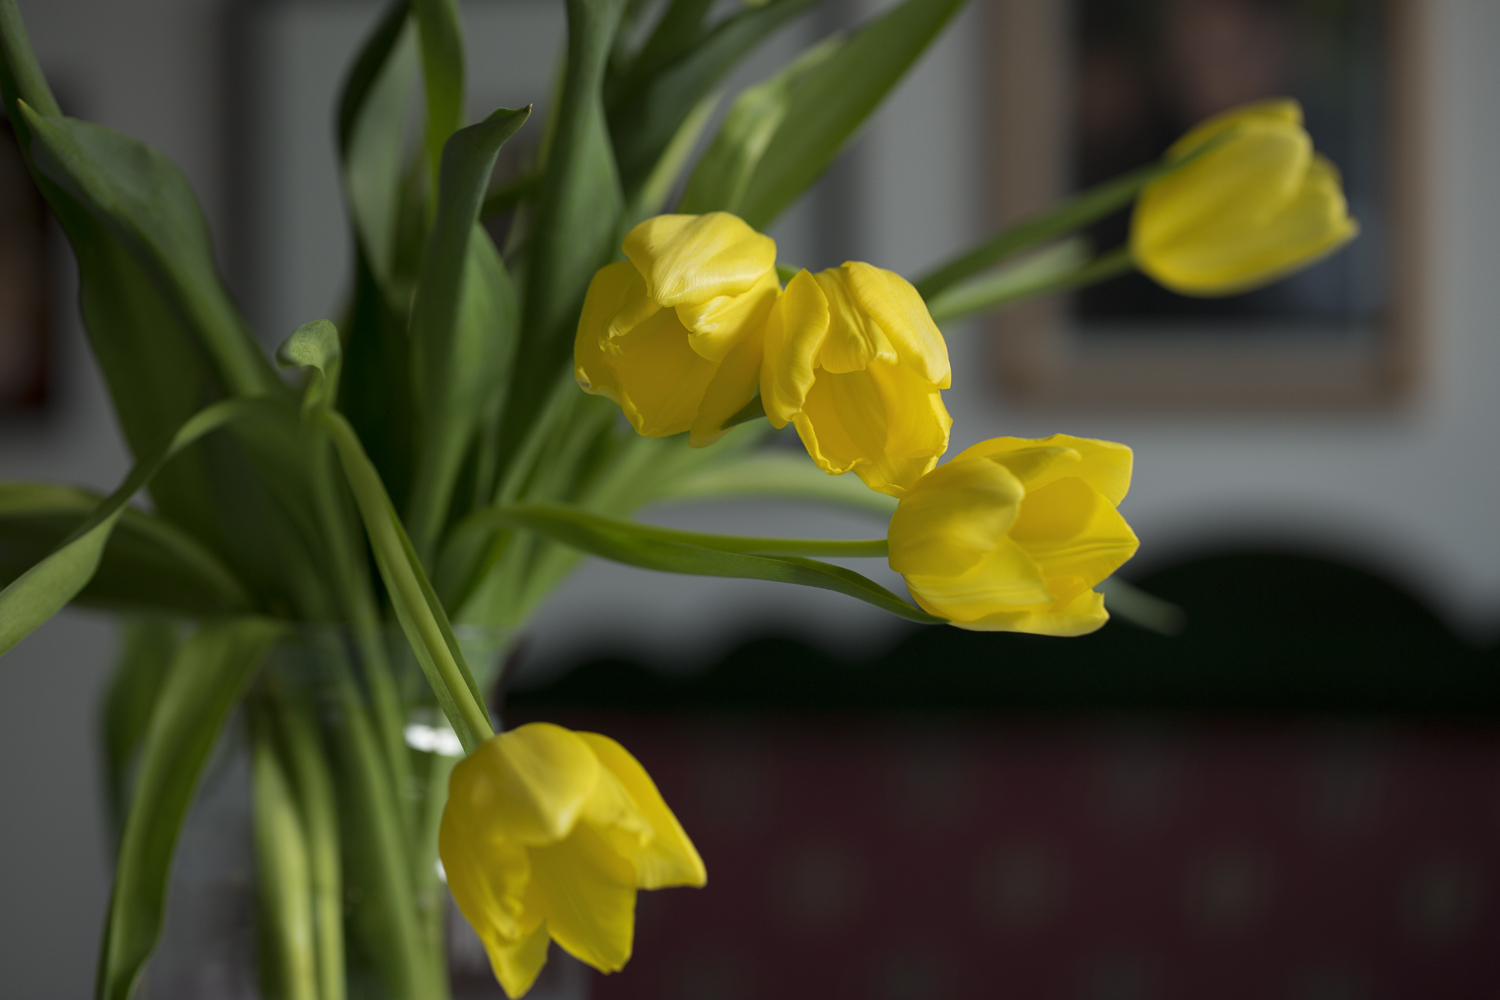 amys_yellow_tulips_02-11-16_4075.jpg